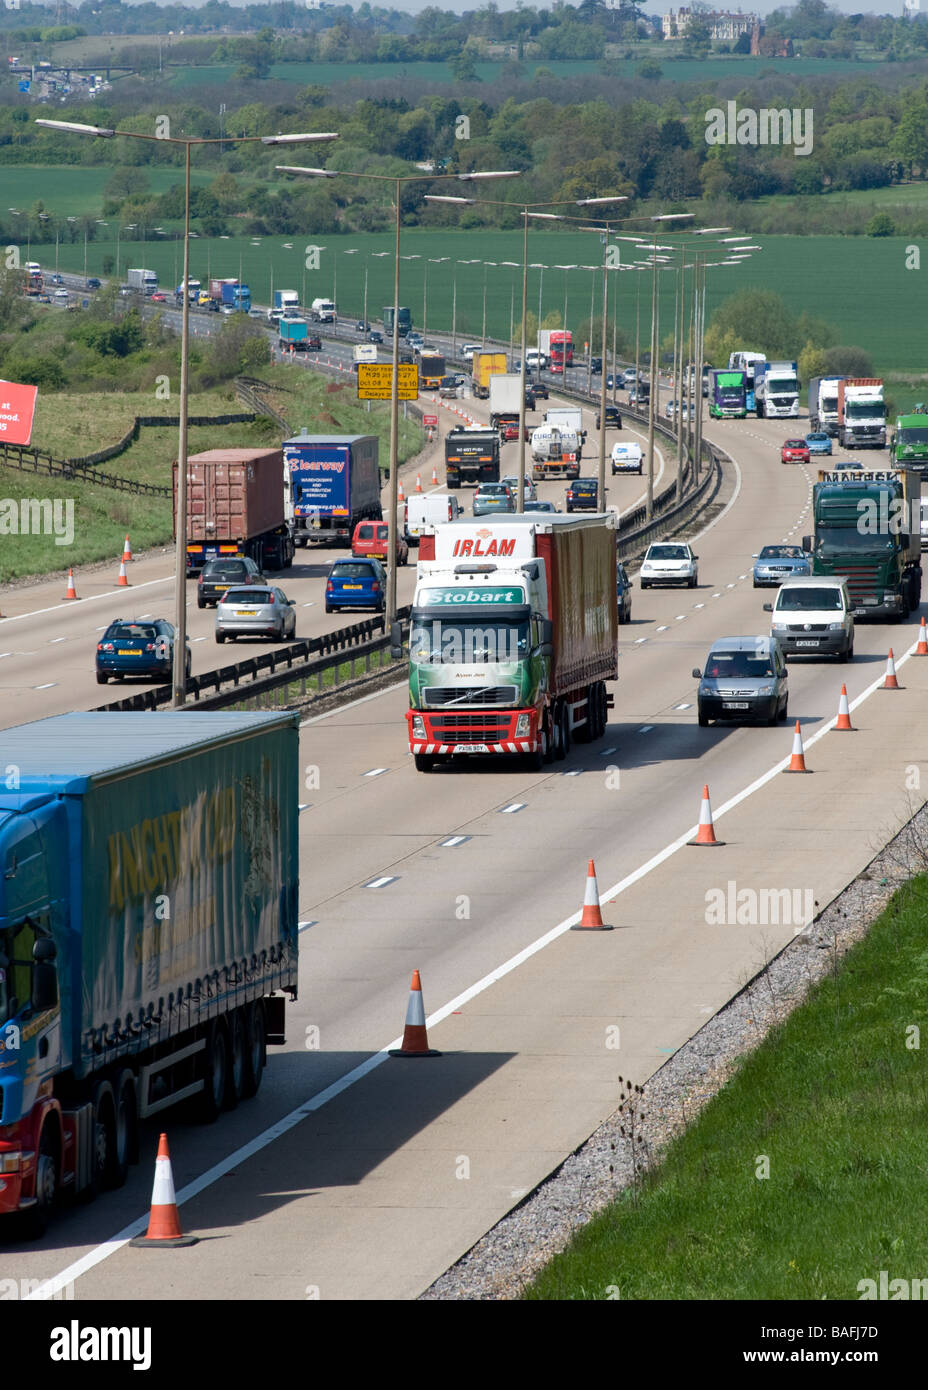 Heavy goods traffic passes through Essex on the M25 London Orbital Motorway towards the Queen Elizabeth II Bridge. Stock Photo